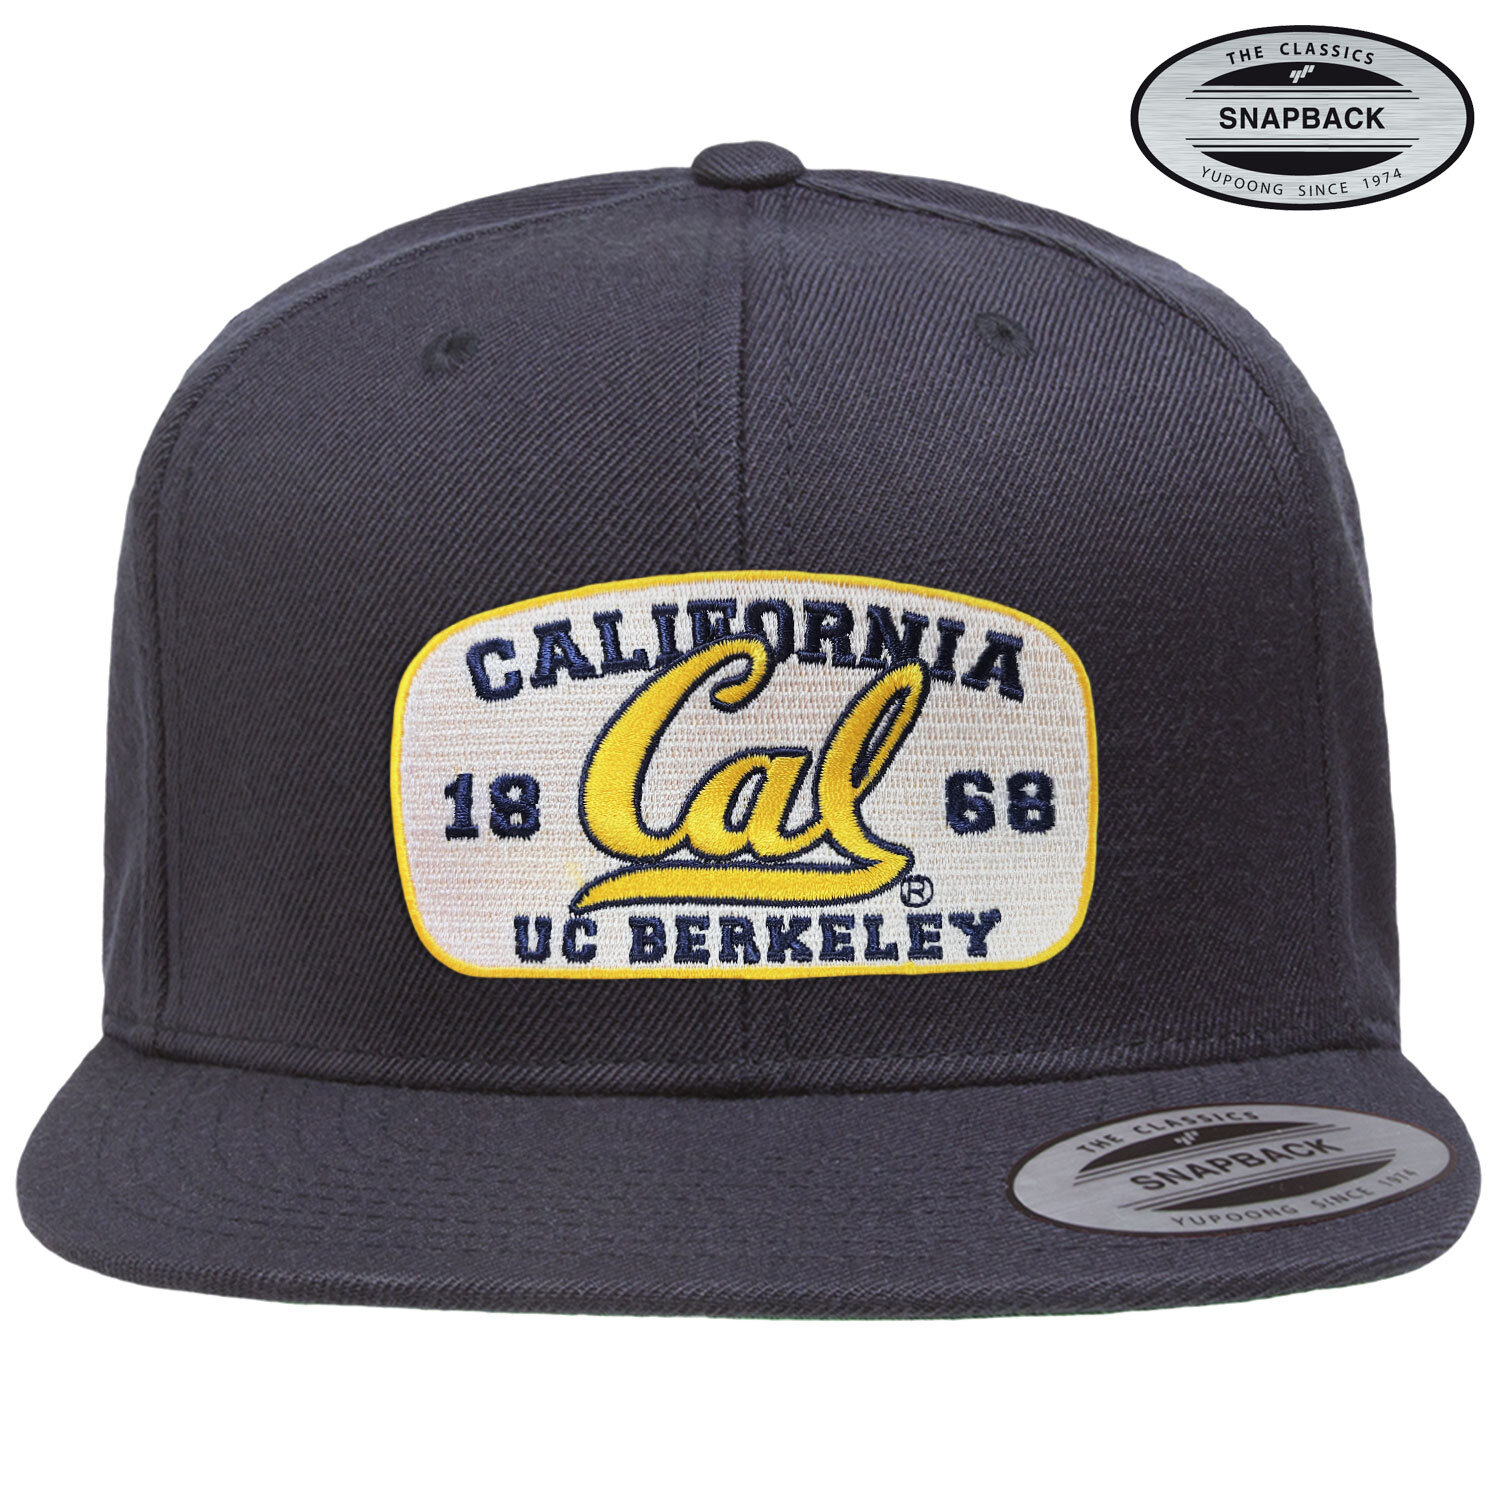 Berkeley - University of California Premium Snapback Cap